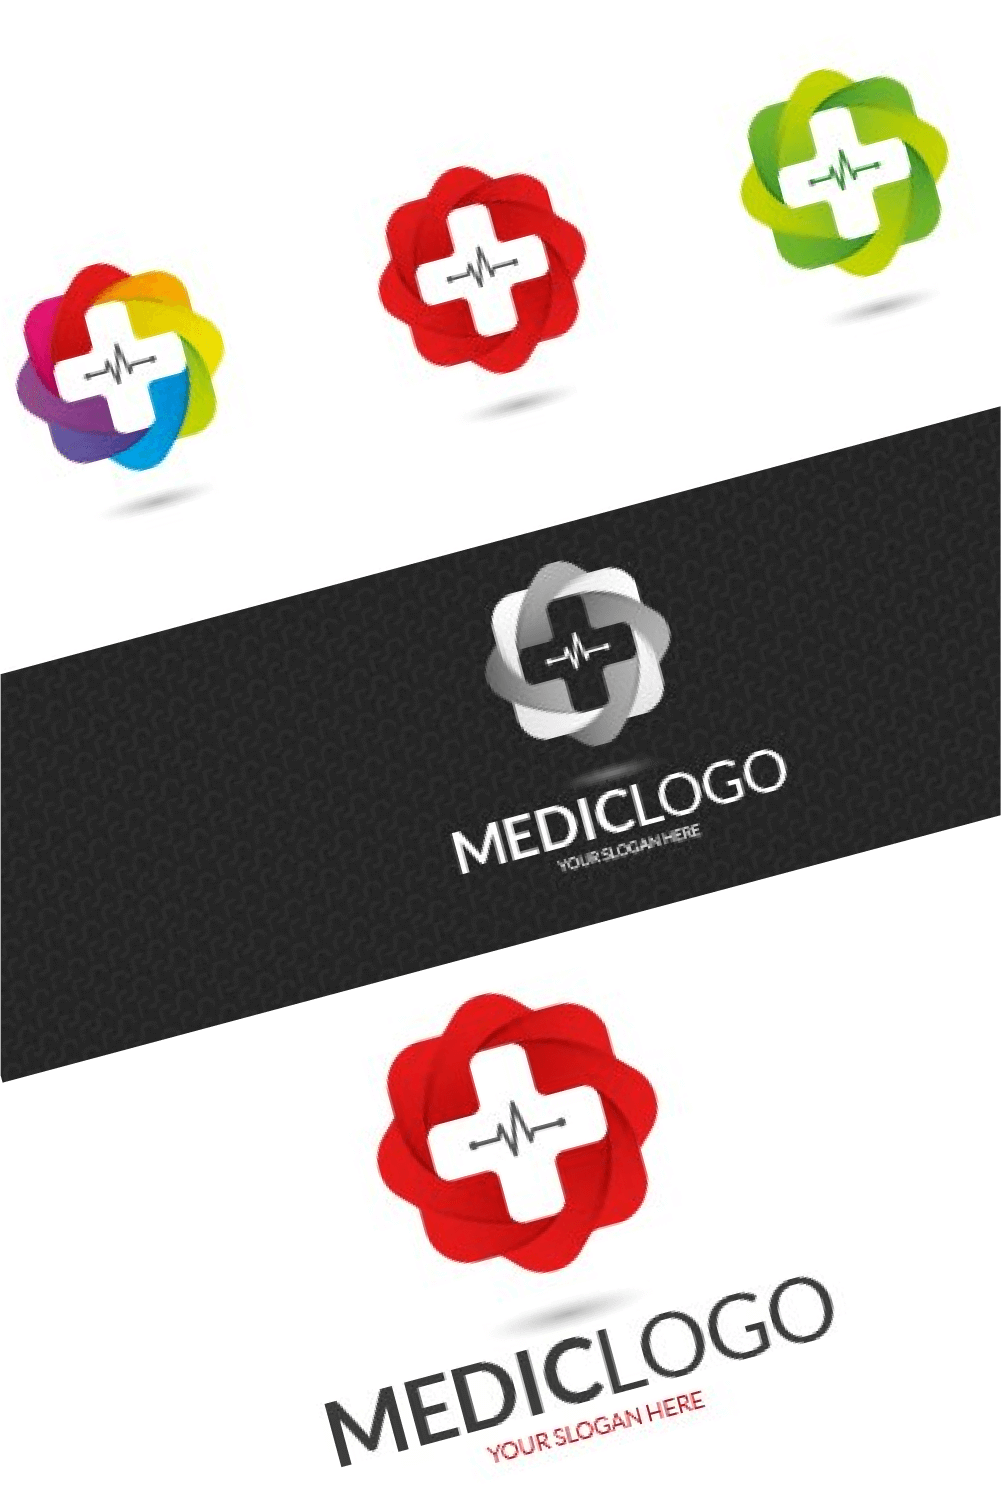 Mediclogo Minimalist logo.